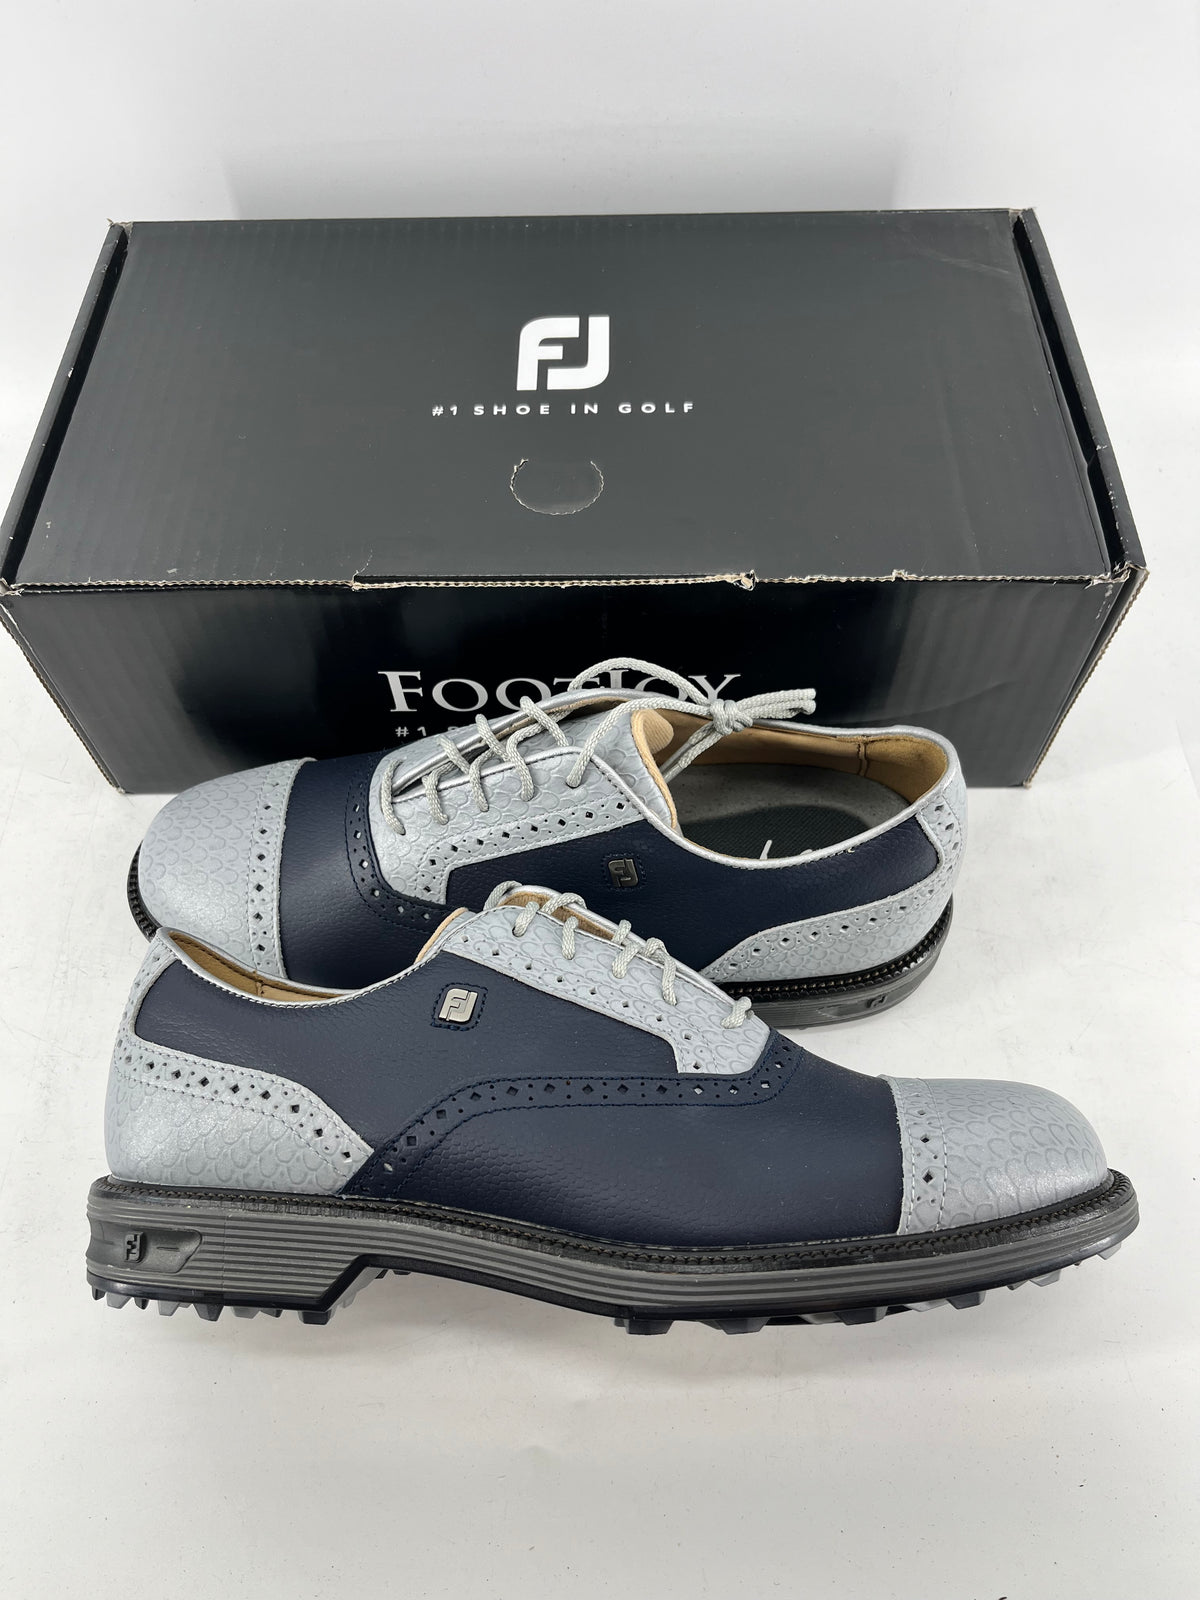 Footjoy Myjoys Premiere Series Tarlow Spikeless Golf Shoes Blue 8 Medium Custom